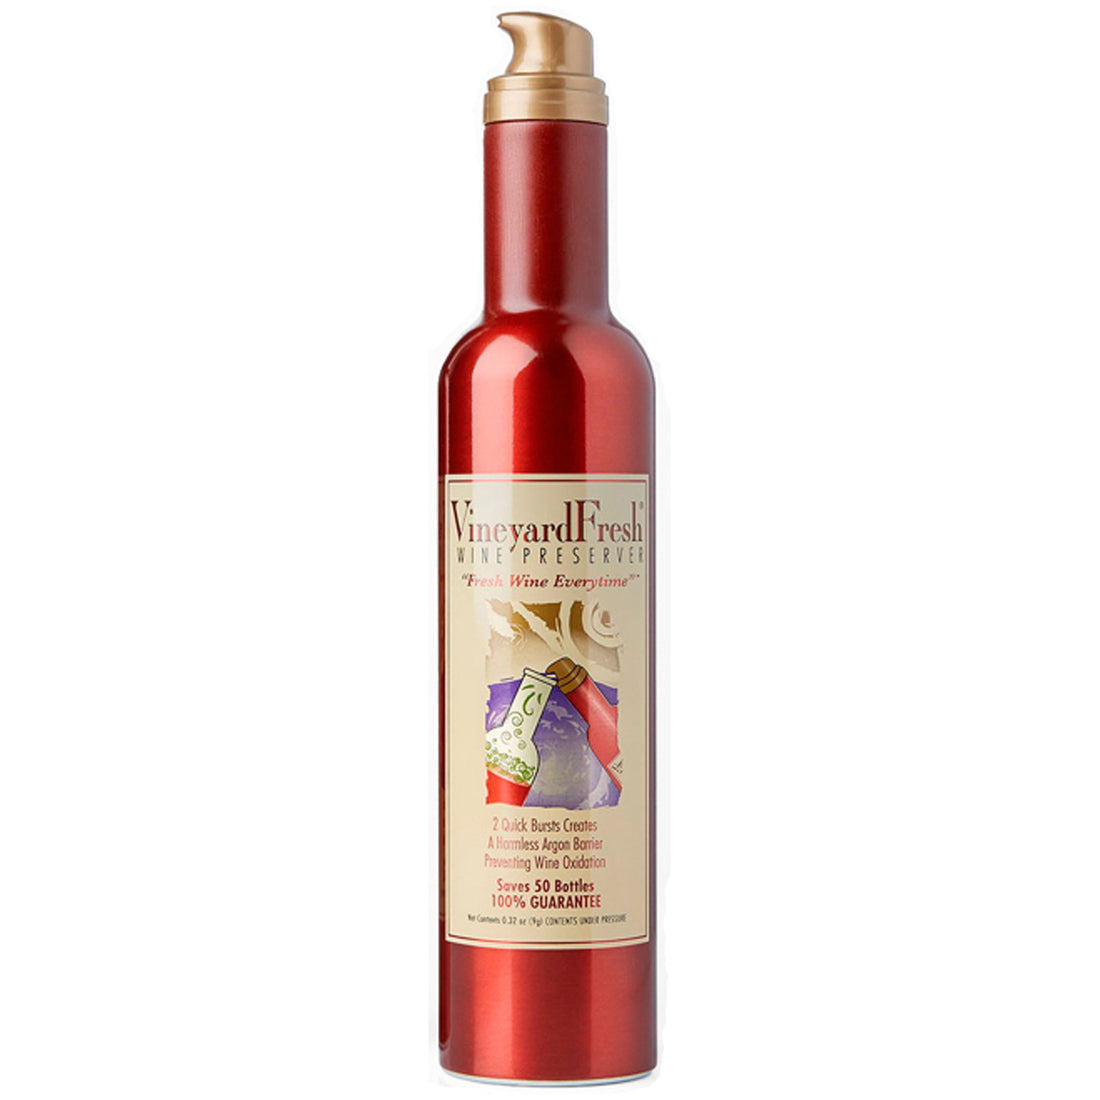 VineyardFresh Wine Preserver - An Alternate Description of the Product